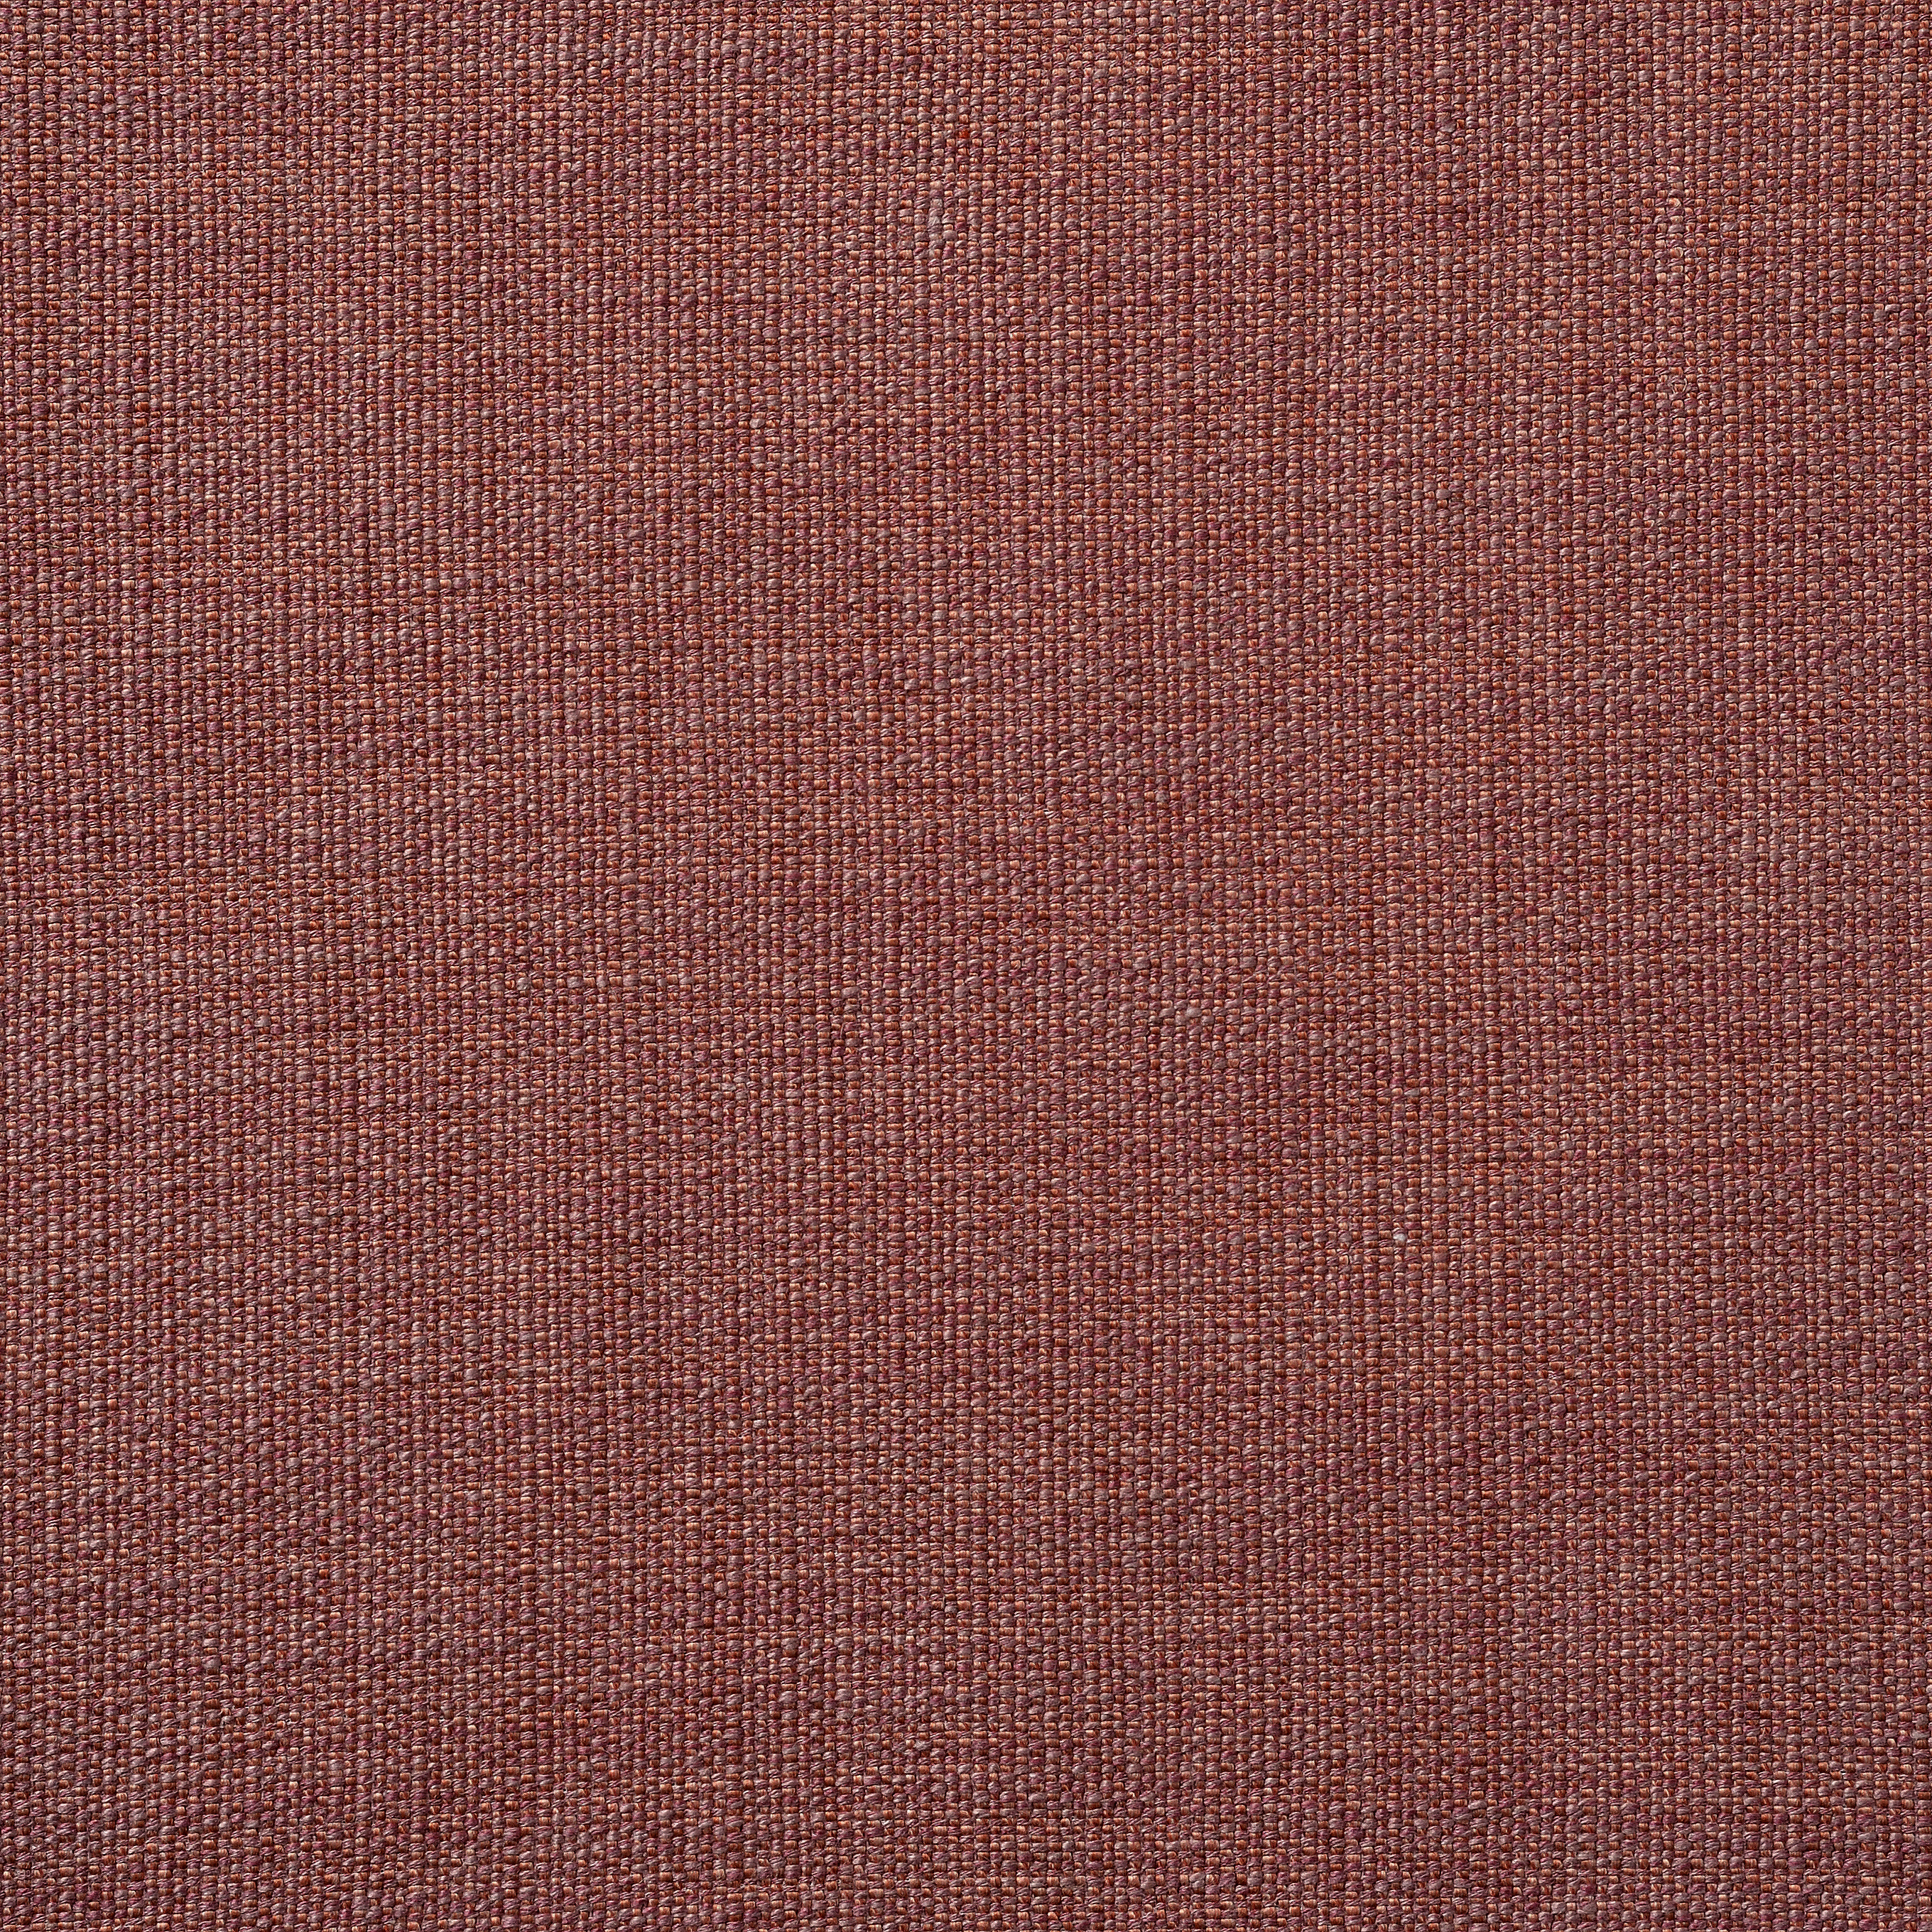 Harriet Rustic Weave - Blush Marl